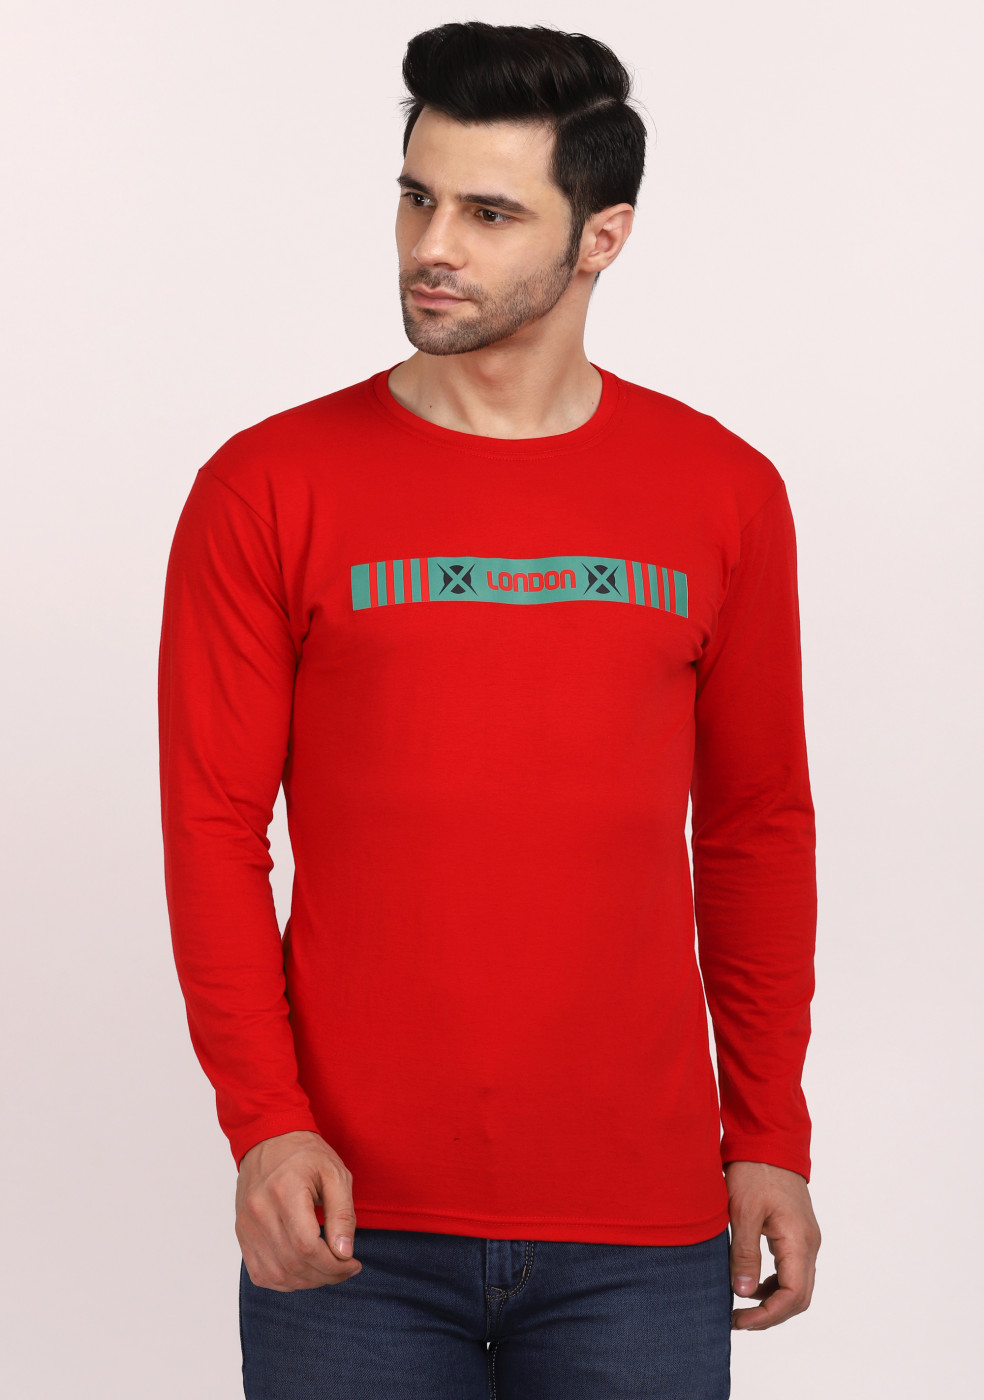 HUKH Red Cotton Lycra T Shirt Full Sleeve Round Neck For Men